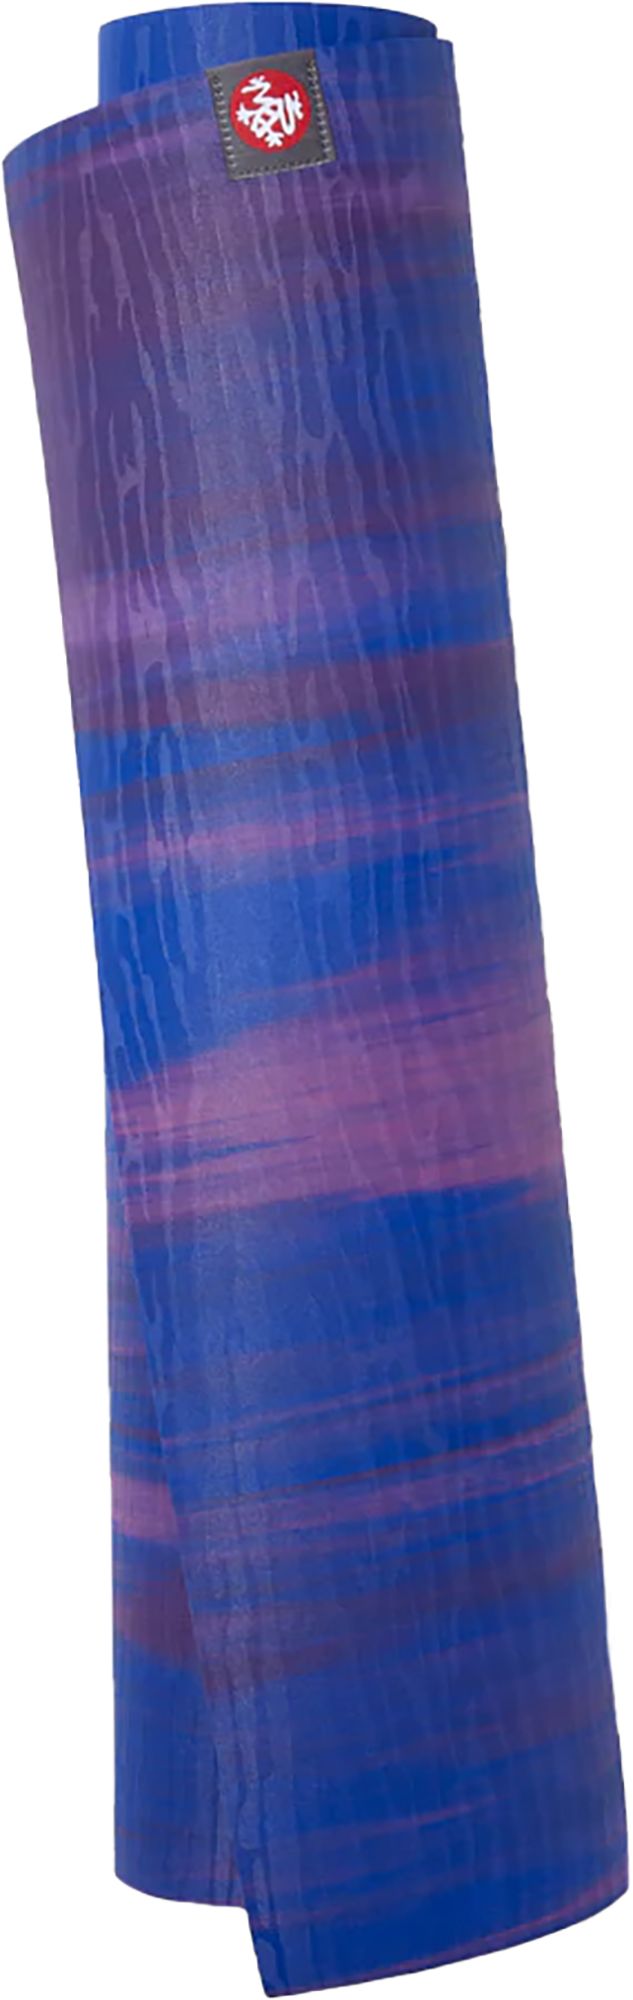 Manduka 4mm eKOlite Yoga Mat